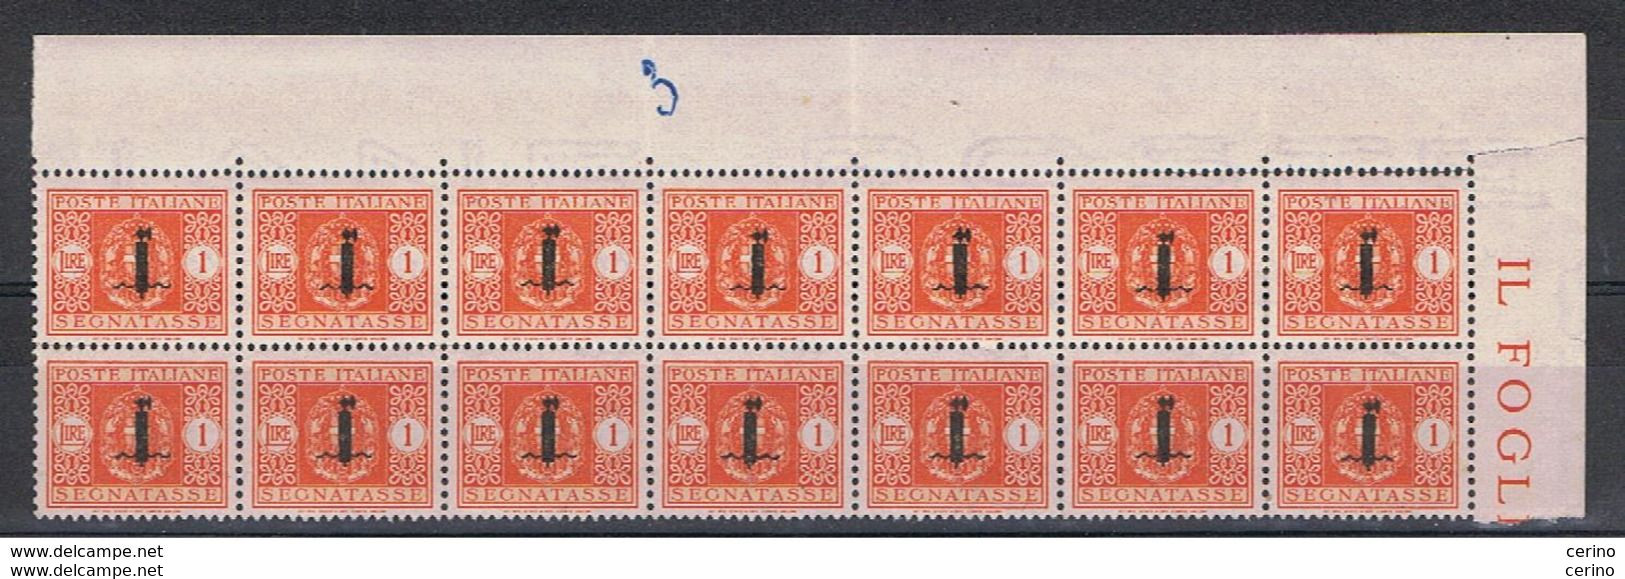 R.S.I.:  1944  TASSE  - £. 1  ARANCIO  BL. 14  N. -  DENTELLATURA  APERTA  IN  ALTO  A  DX. -   SASS. 68 - Segnatasse